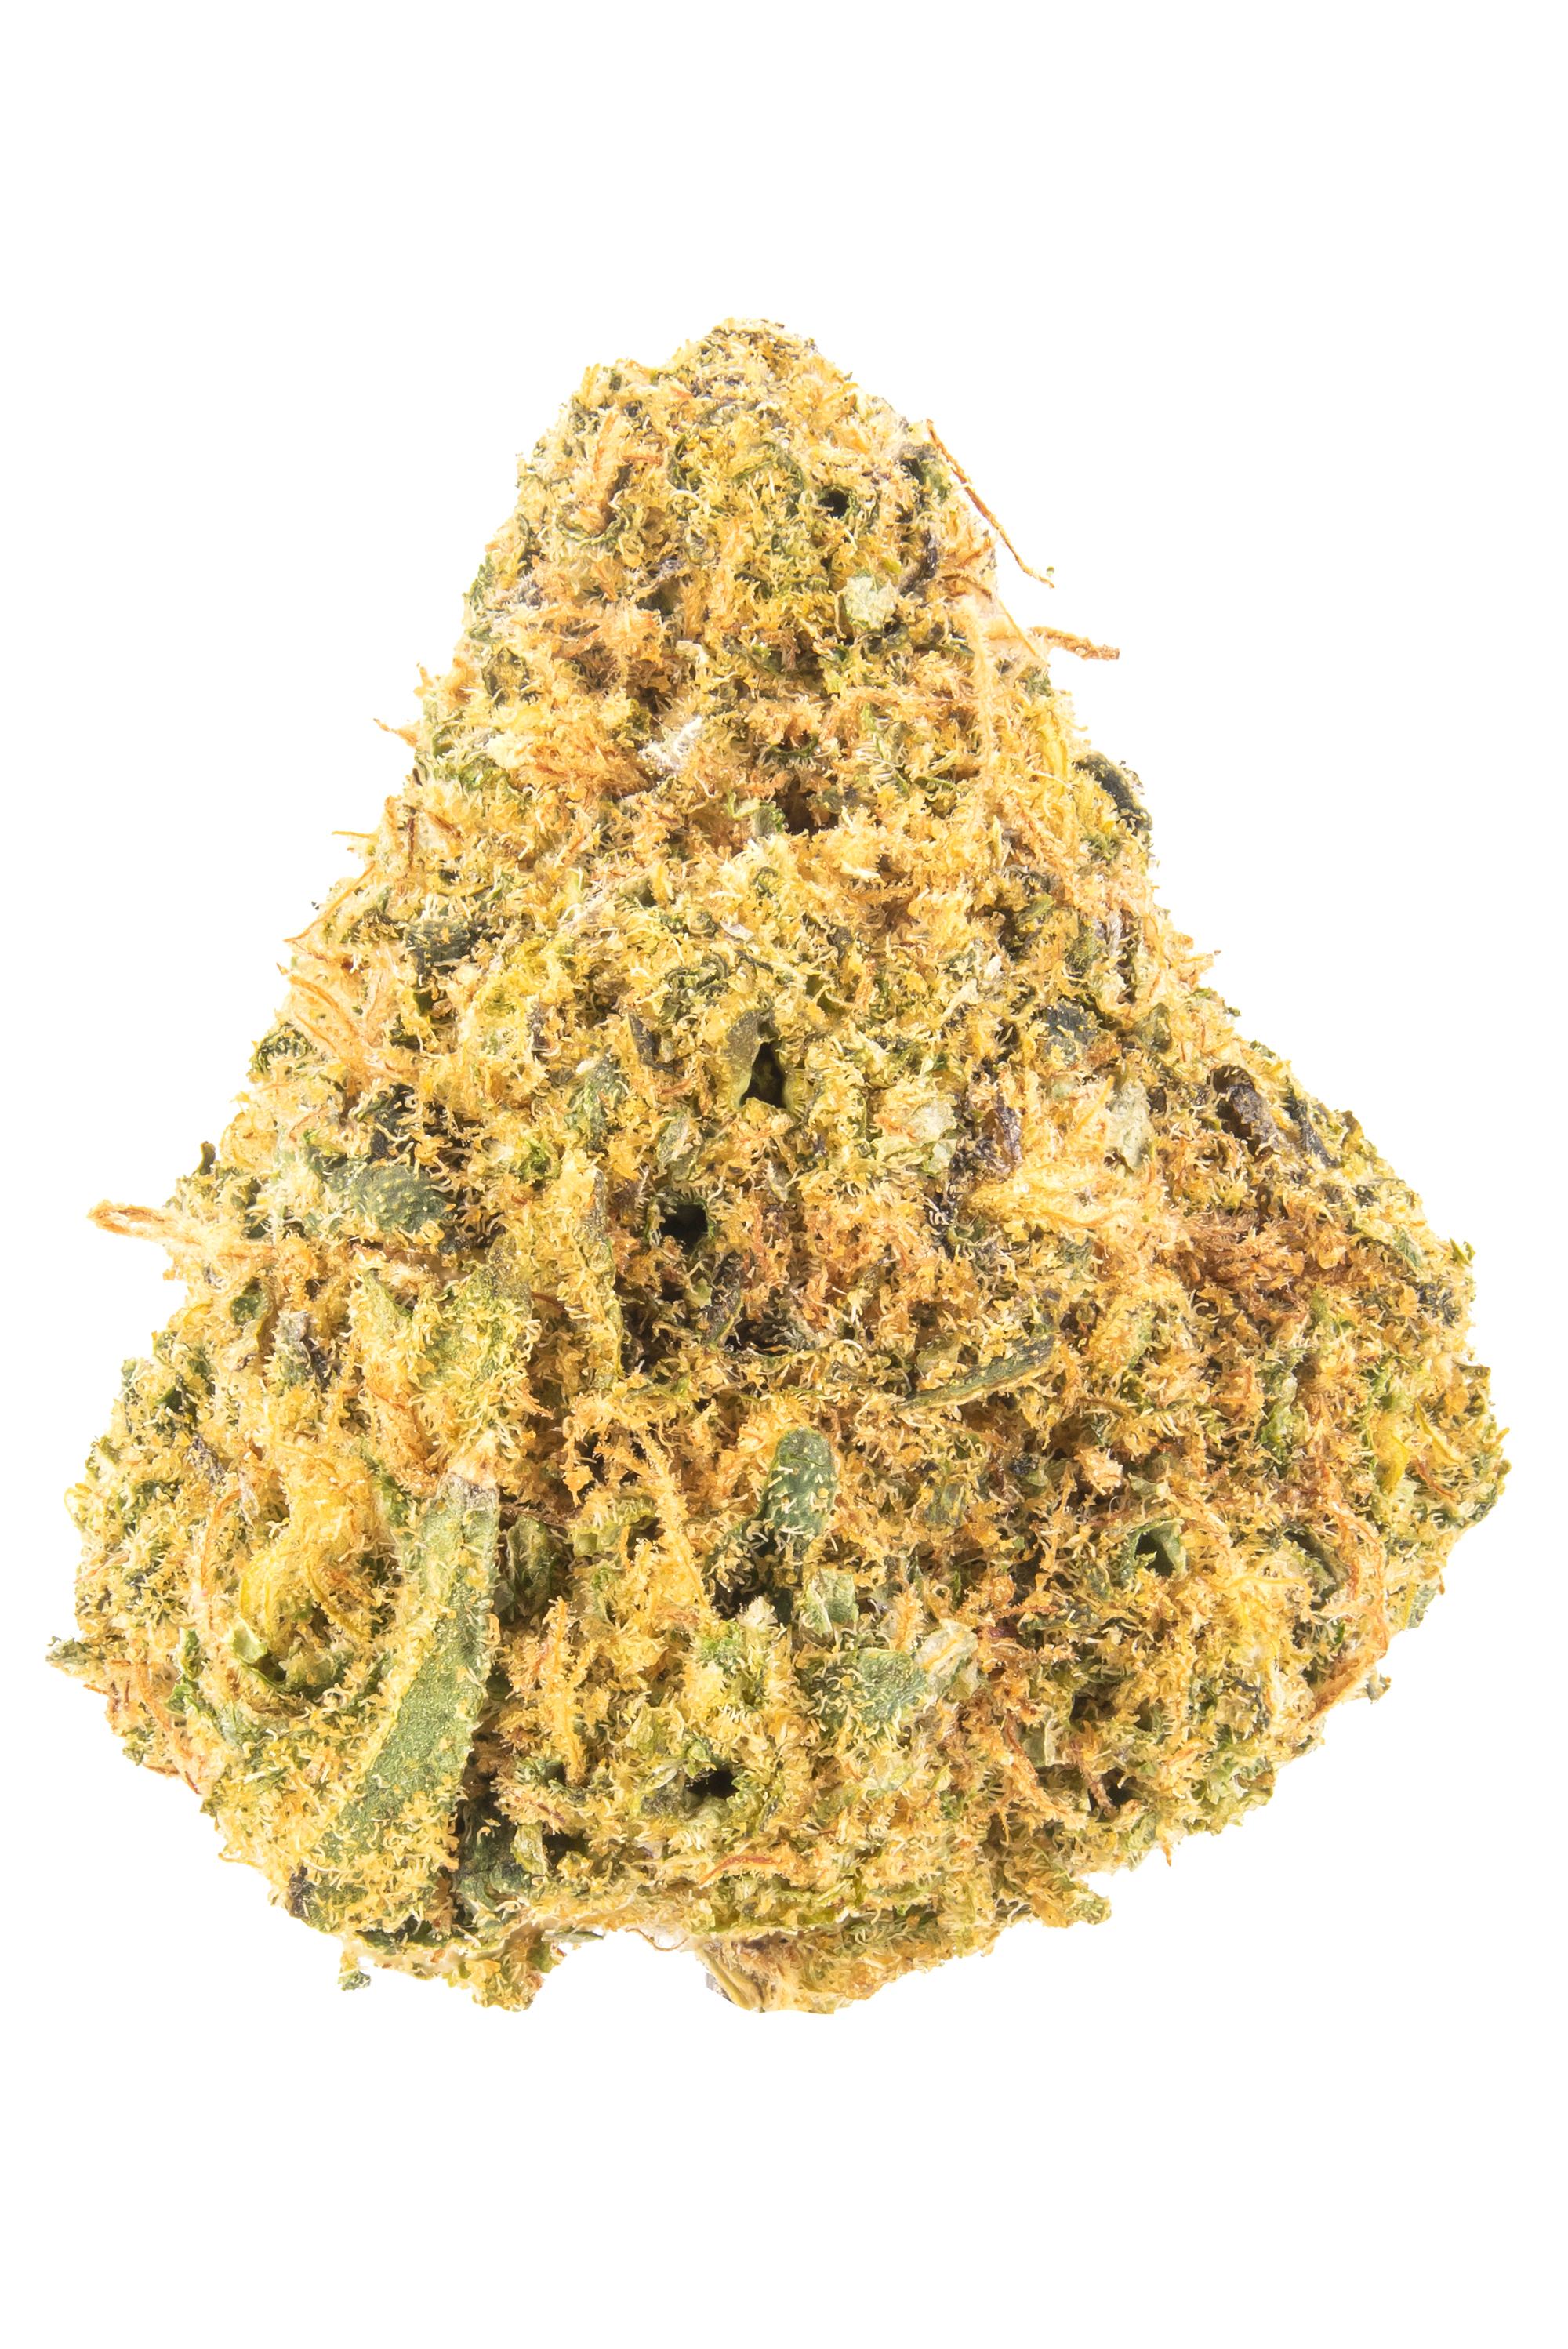 Orangecello - Hybrid Cannabis Strain